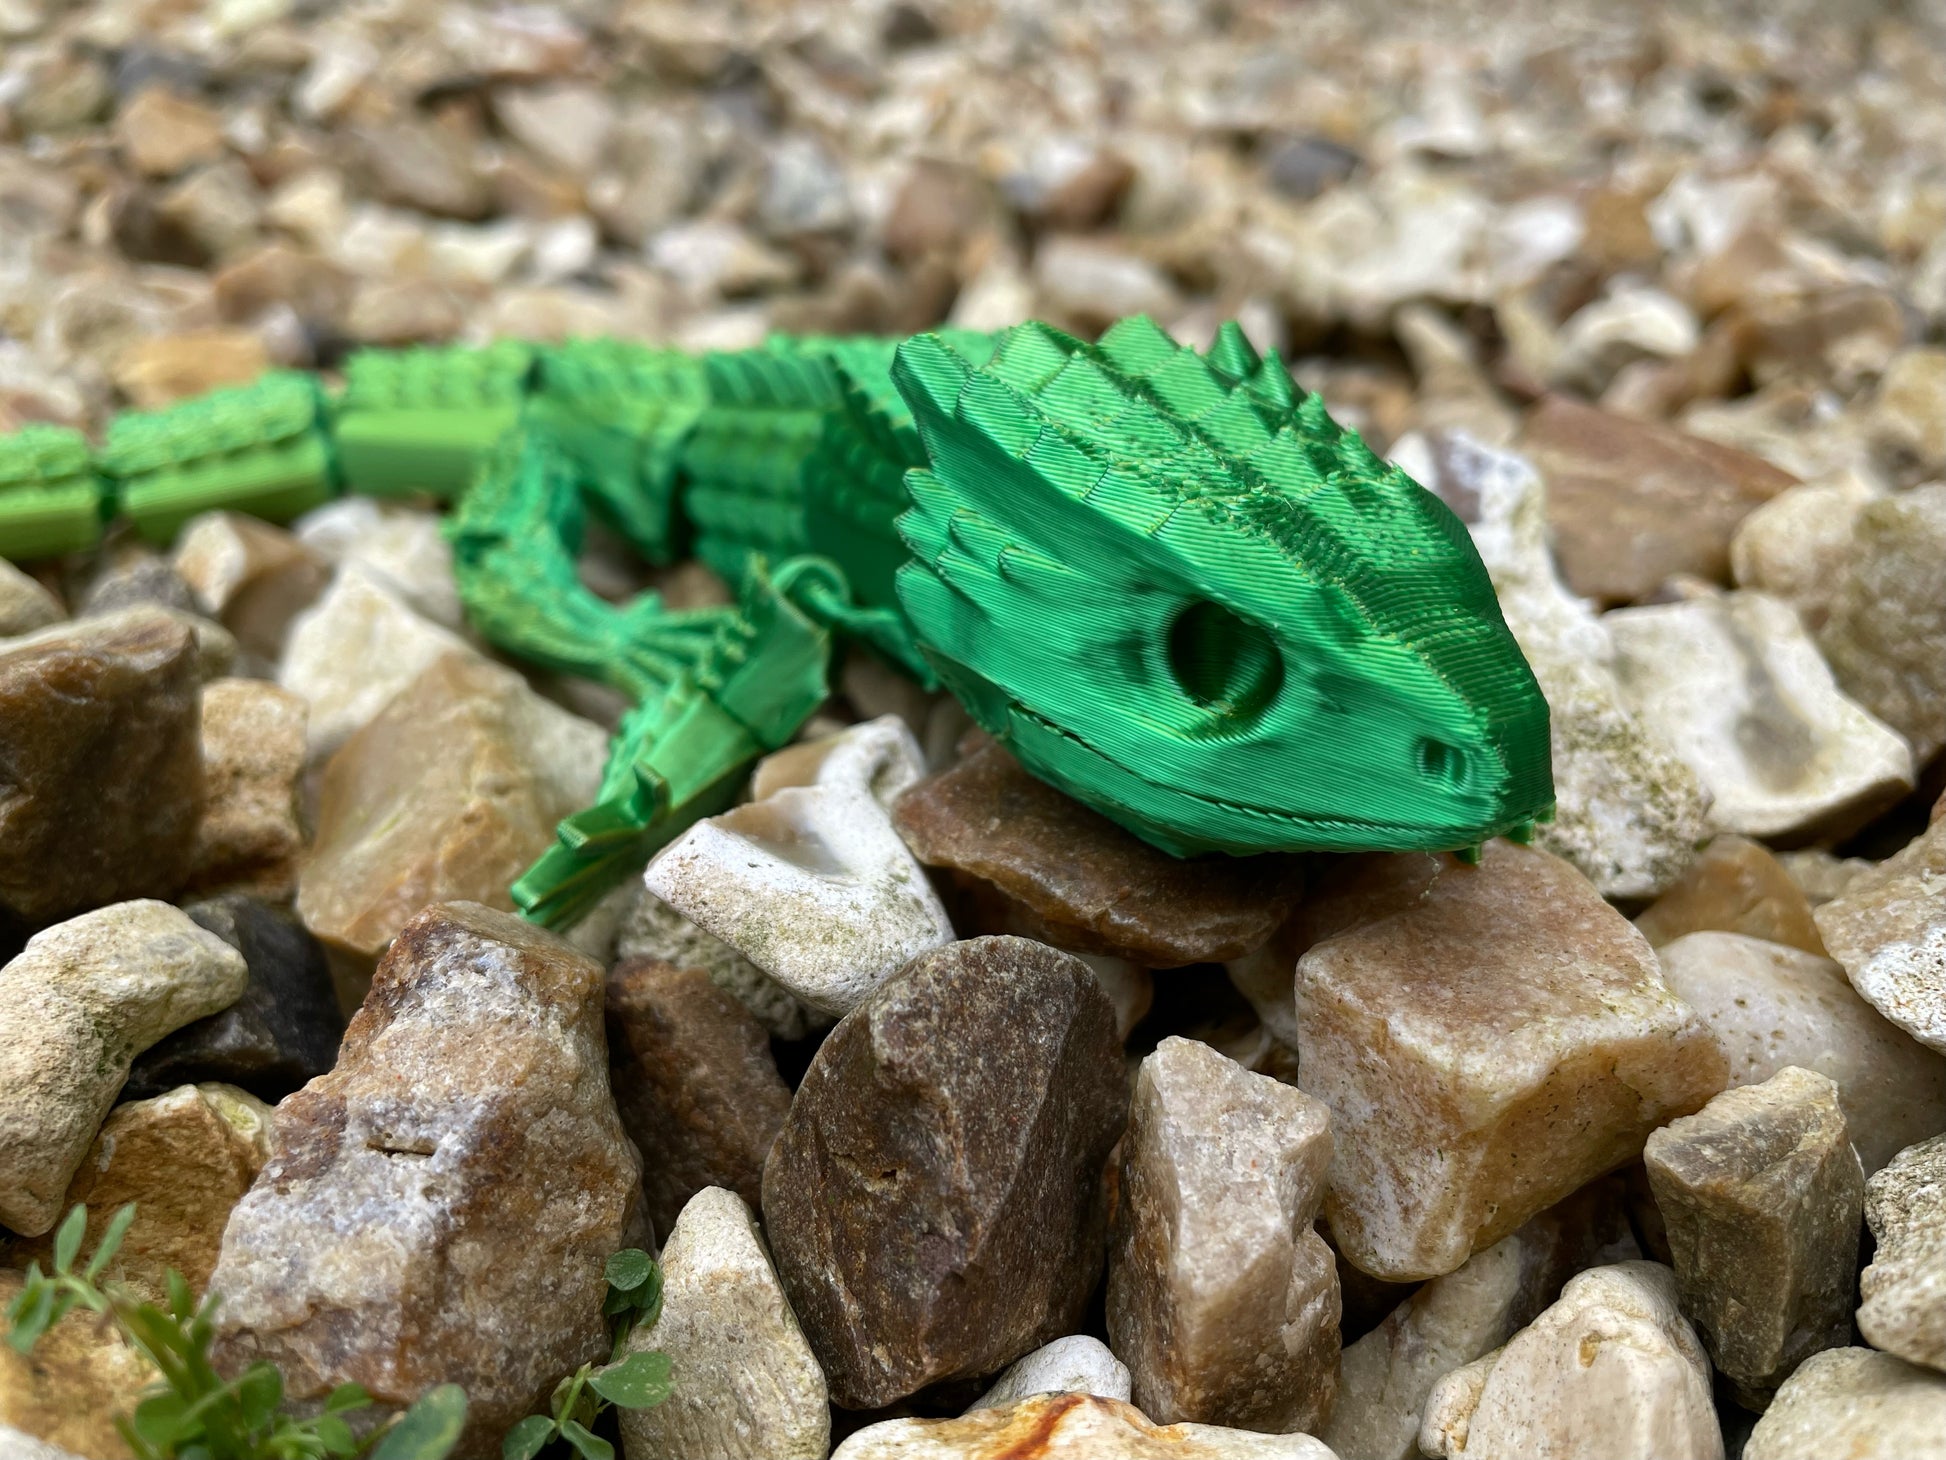 ChromaChill Lizard: Color-Changing Fidget Toy Delight 